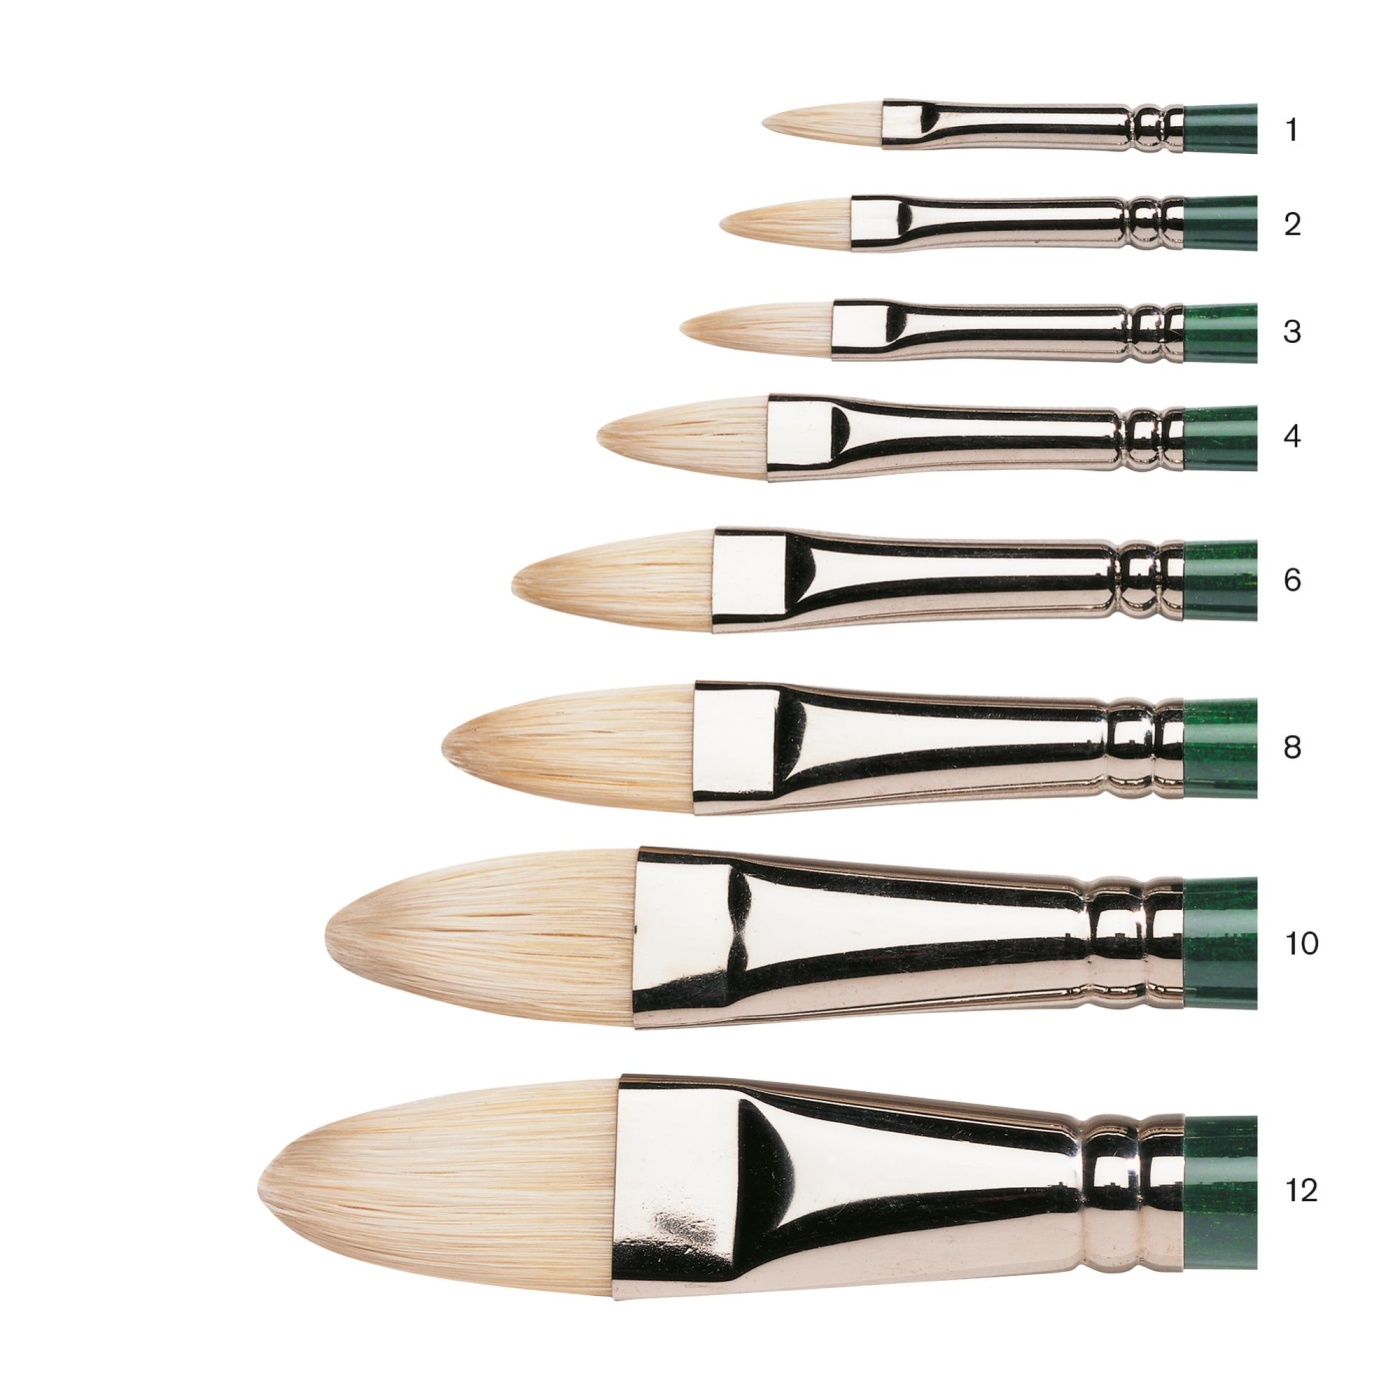 Winton Hog Brush Filbert 1 in the group Art Supplies / Brushes / Natural Hair Brushes at Pen Store (107655)